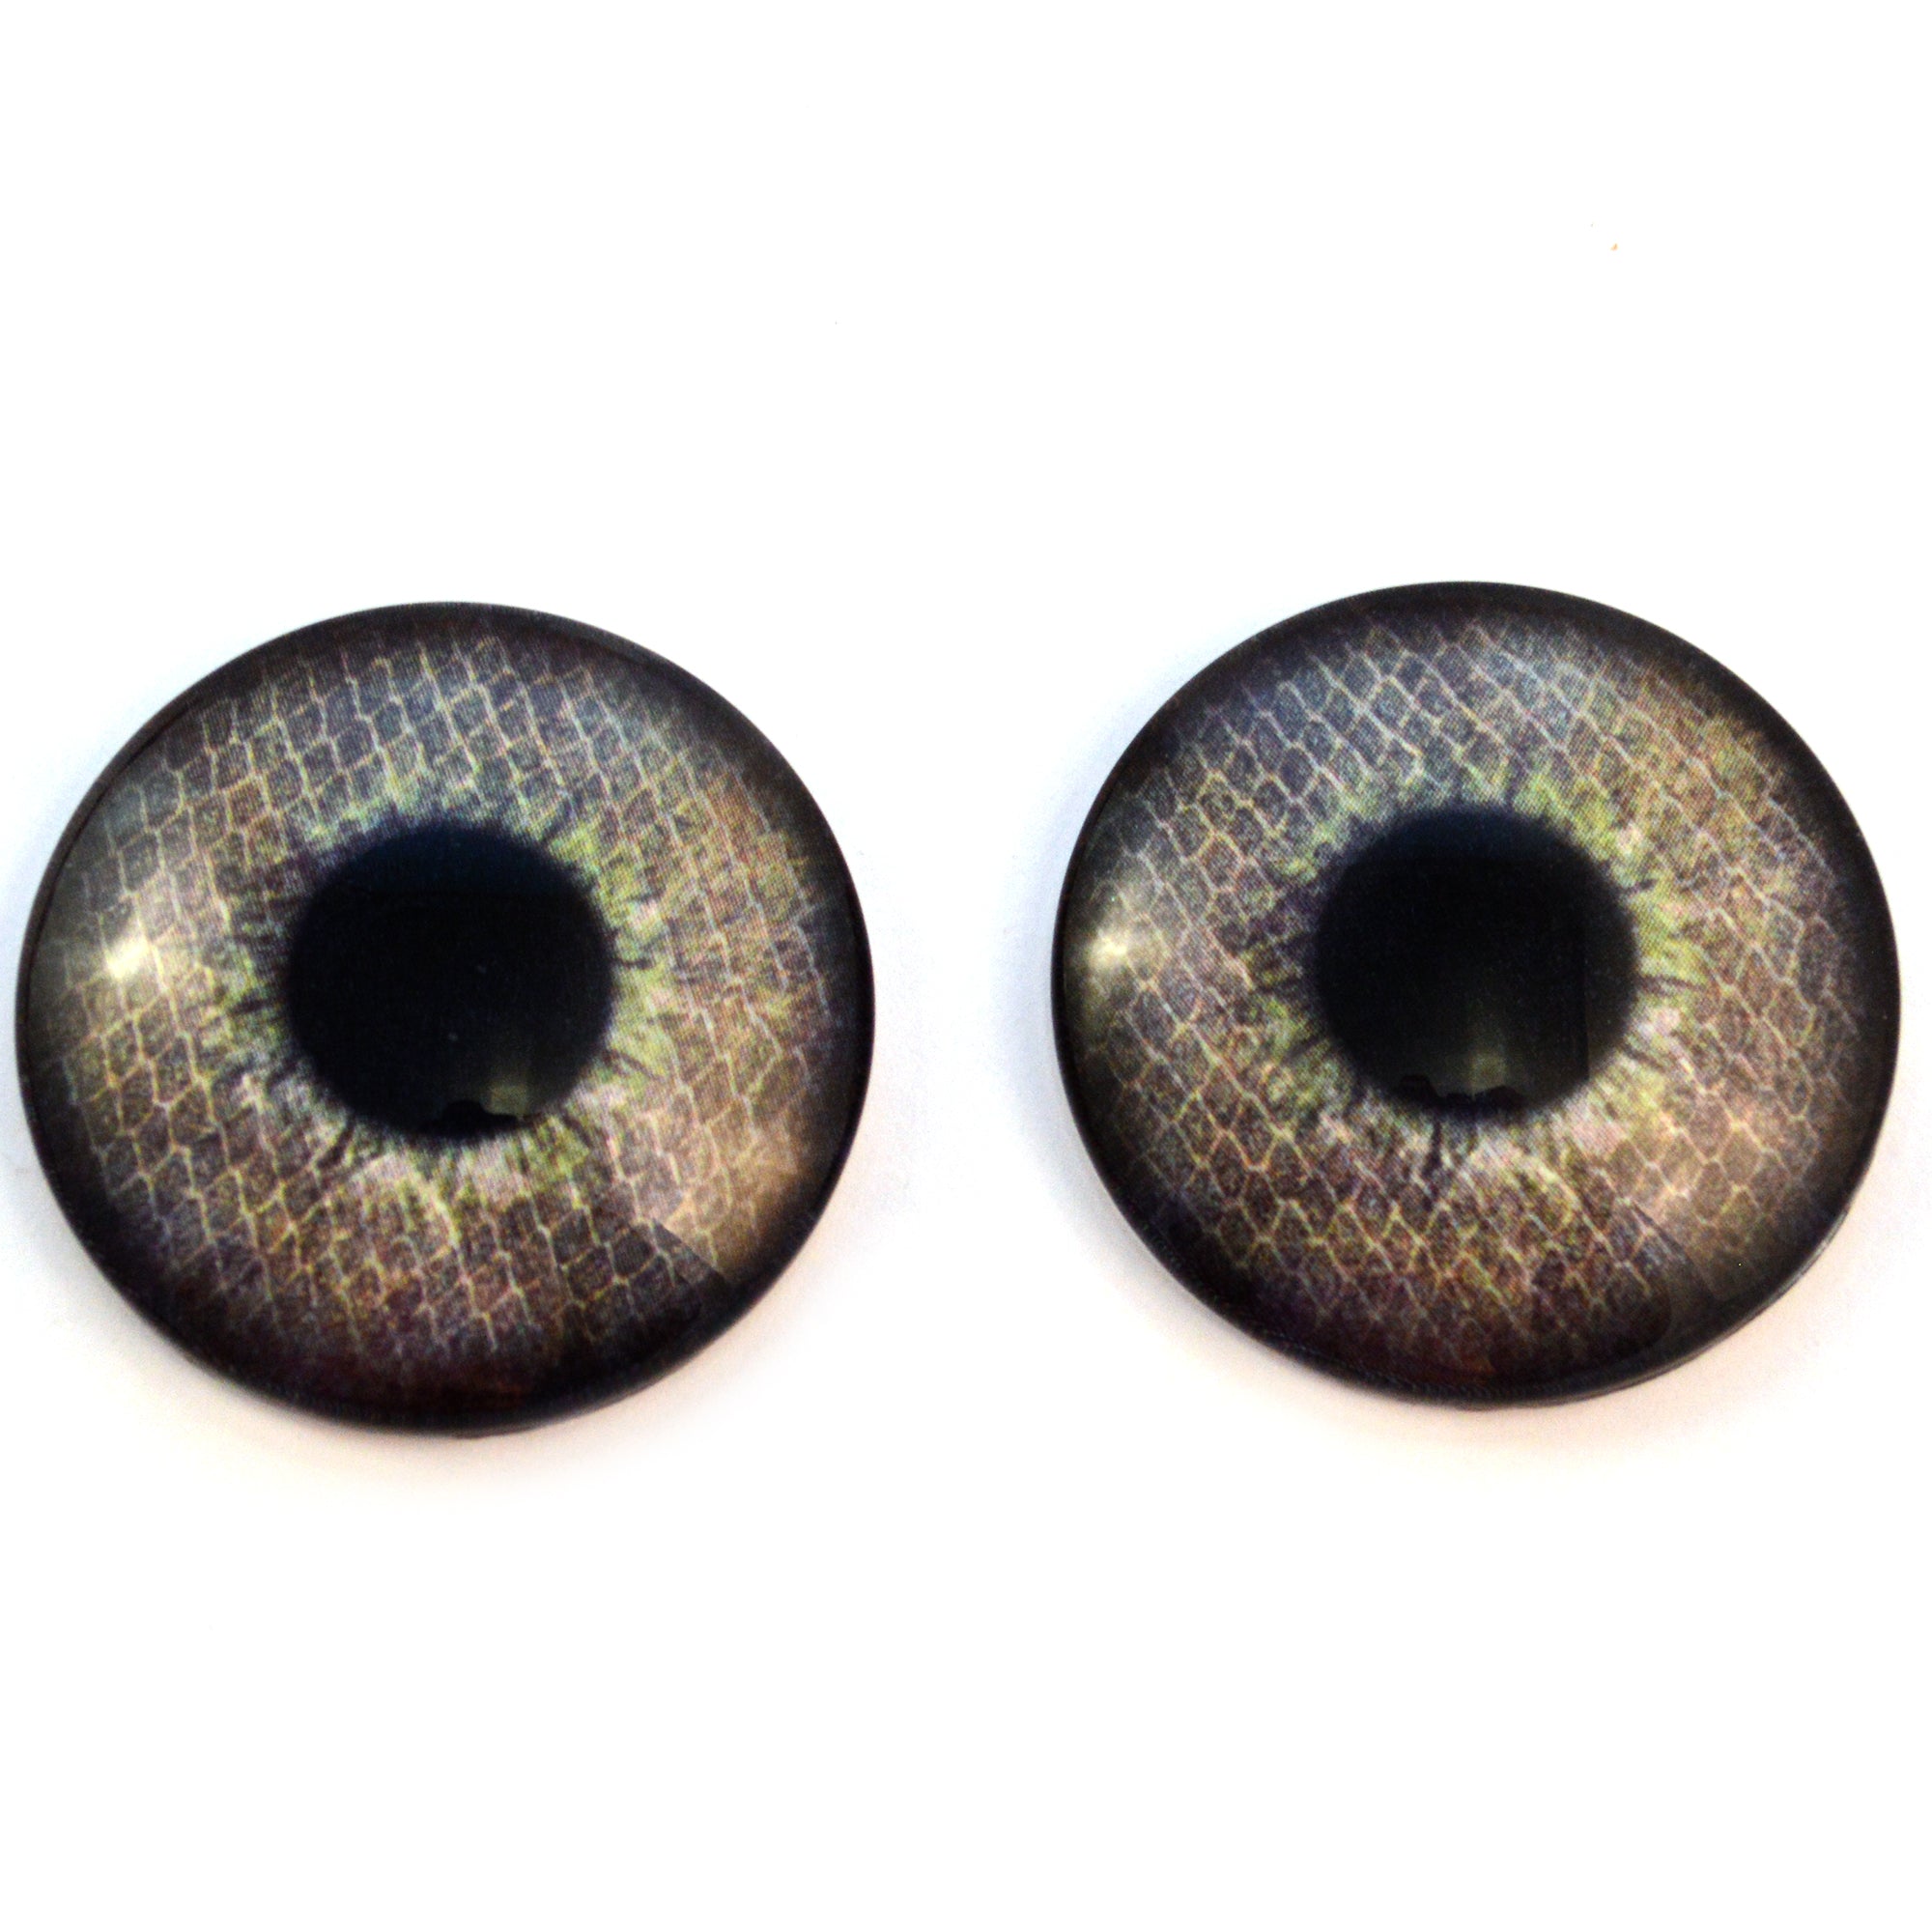 Monster Inspired Glass Eyes Bundle - 5 Pairs – Handmade Glass Eyes